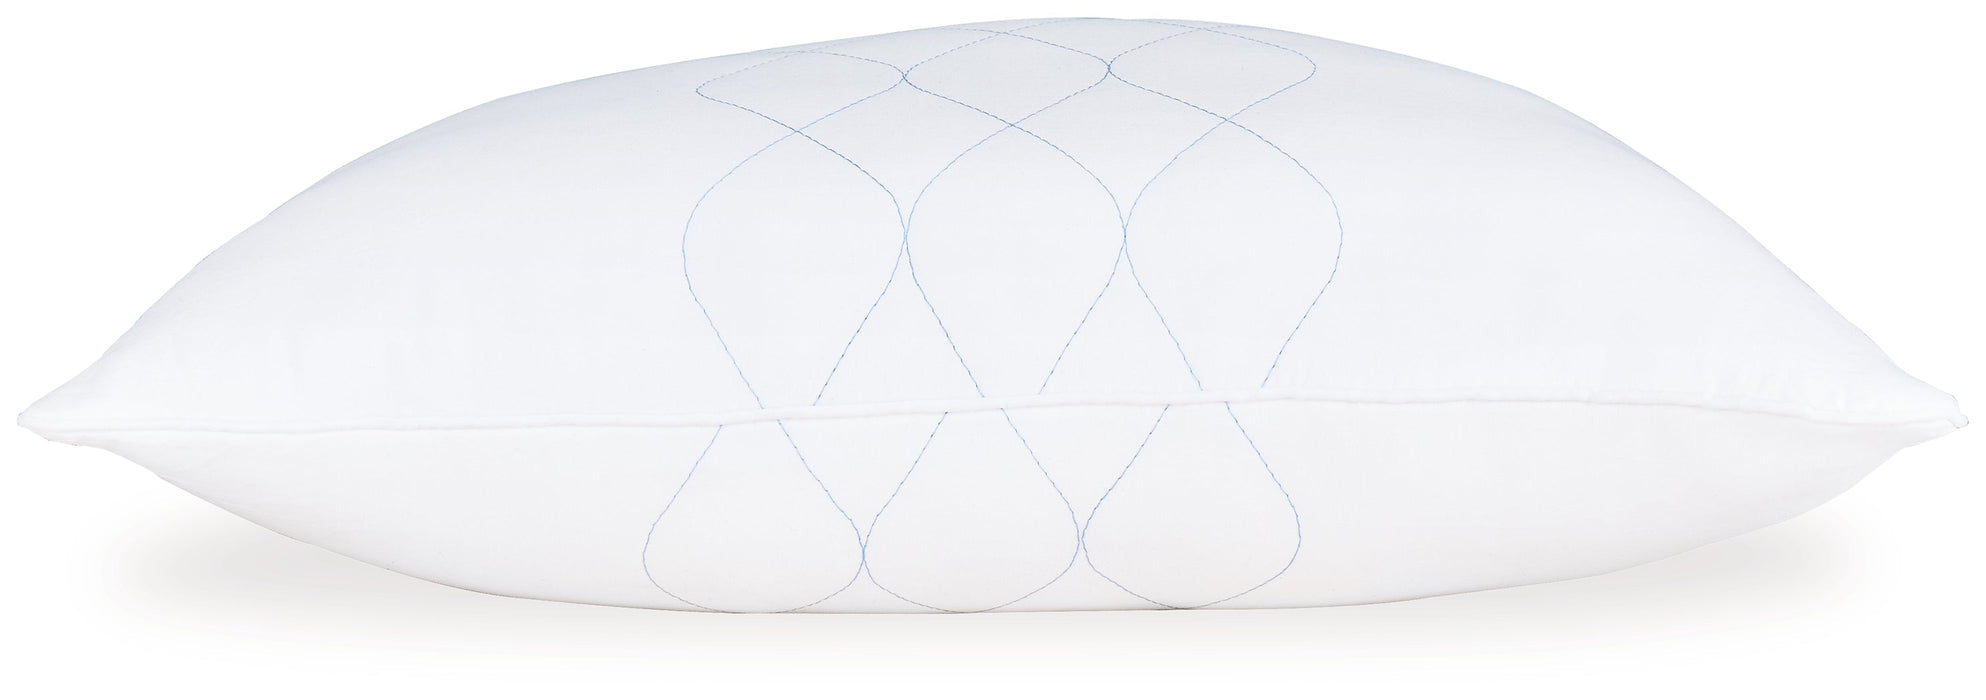 White Comfort Pillow, Set of 4 - M52111 - Vega Furniture